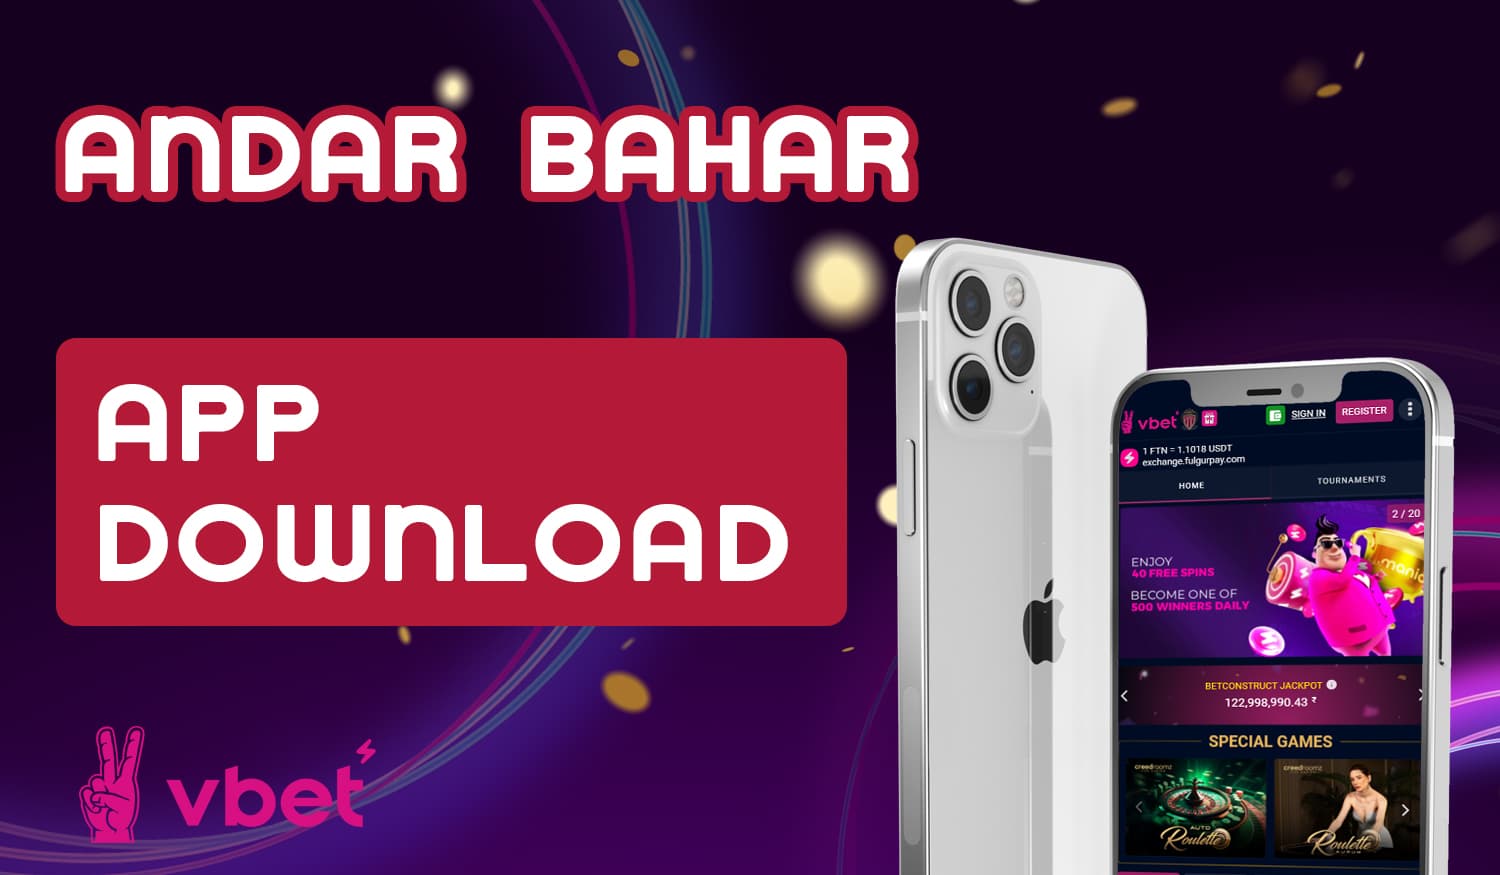 Andar Bahar on mobile: how to download Vbet10 application